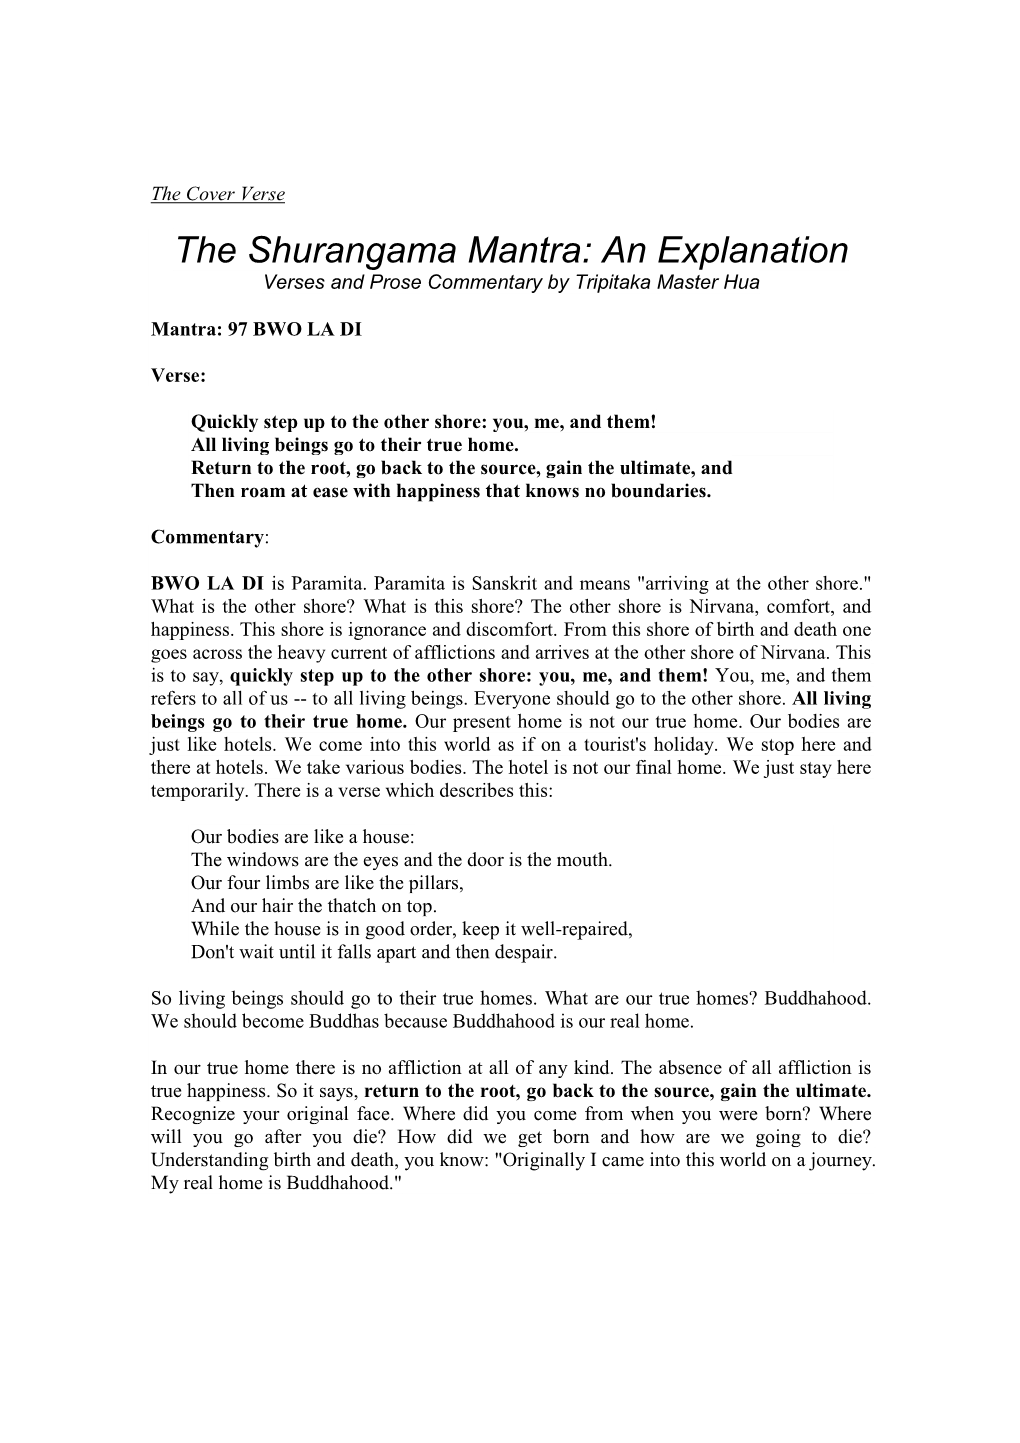 The Shurangama Mantra: an Explanation Verses and Prose Commentary by Tripitaka Master Hua